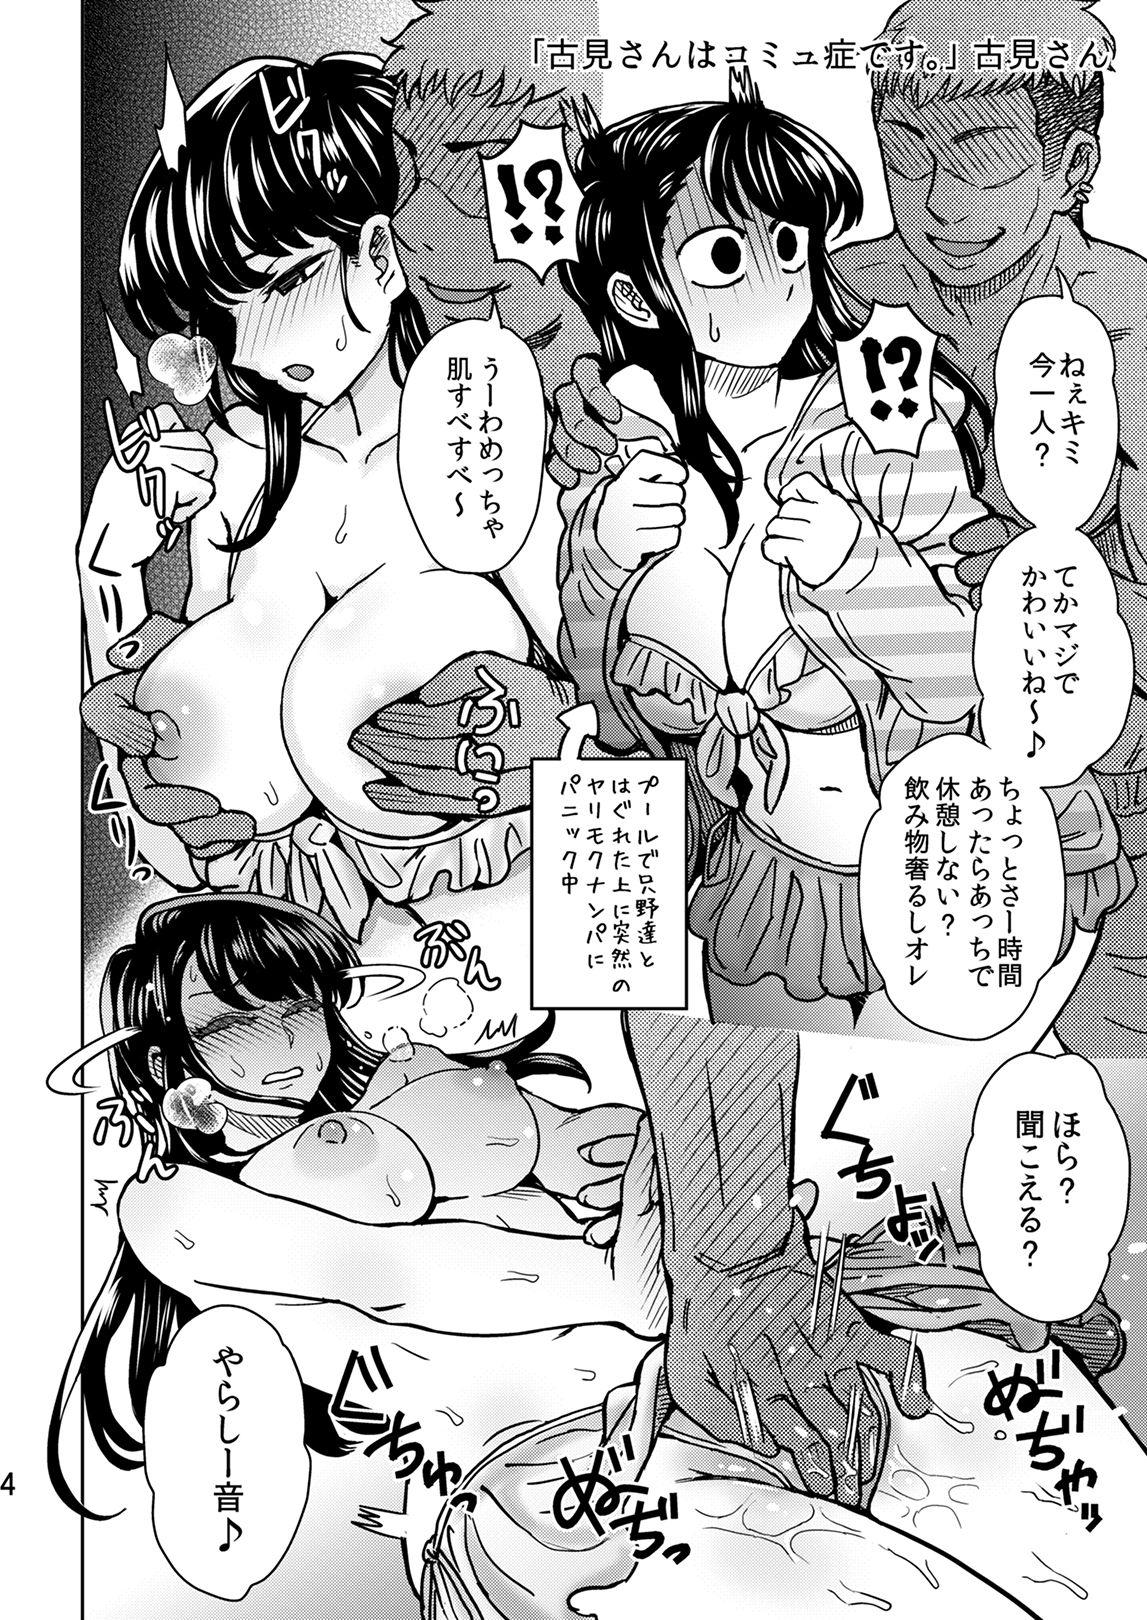 C95 Yorozu NTR Short Manga Shuu 4